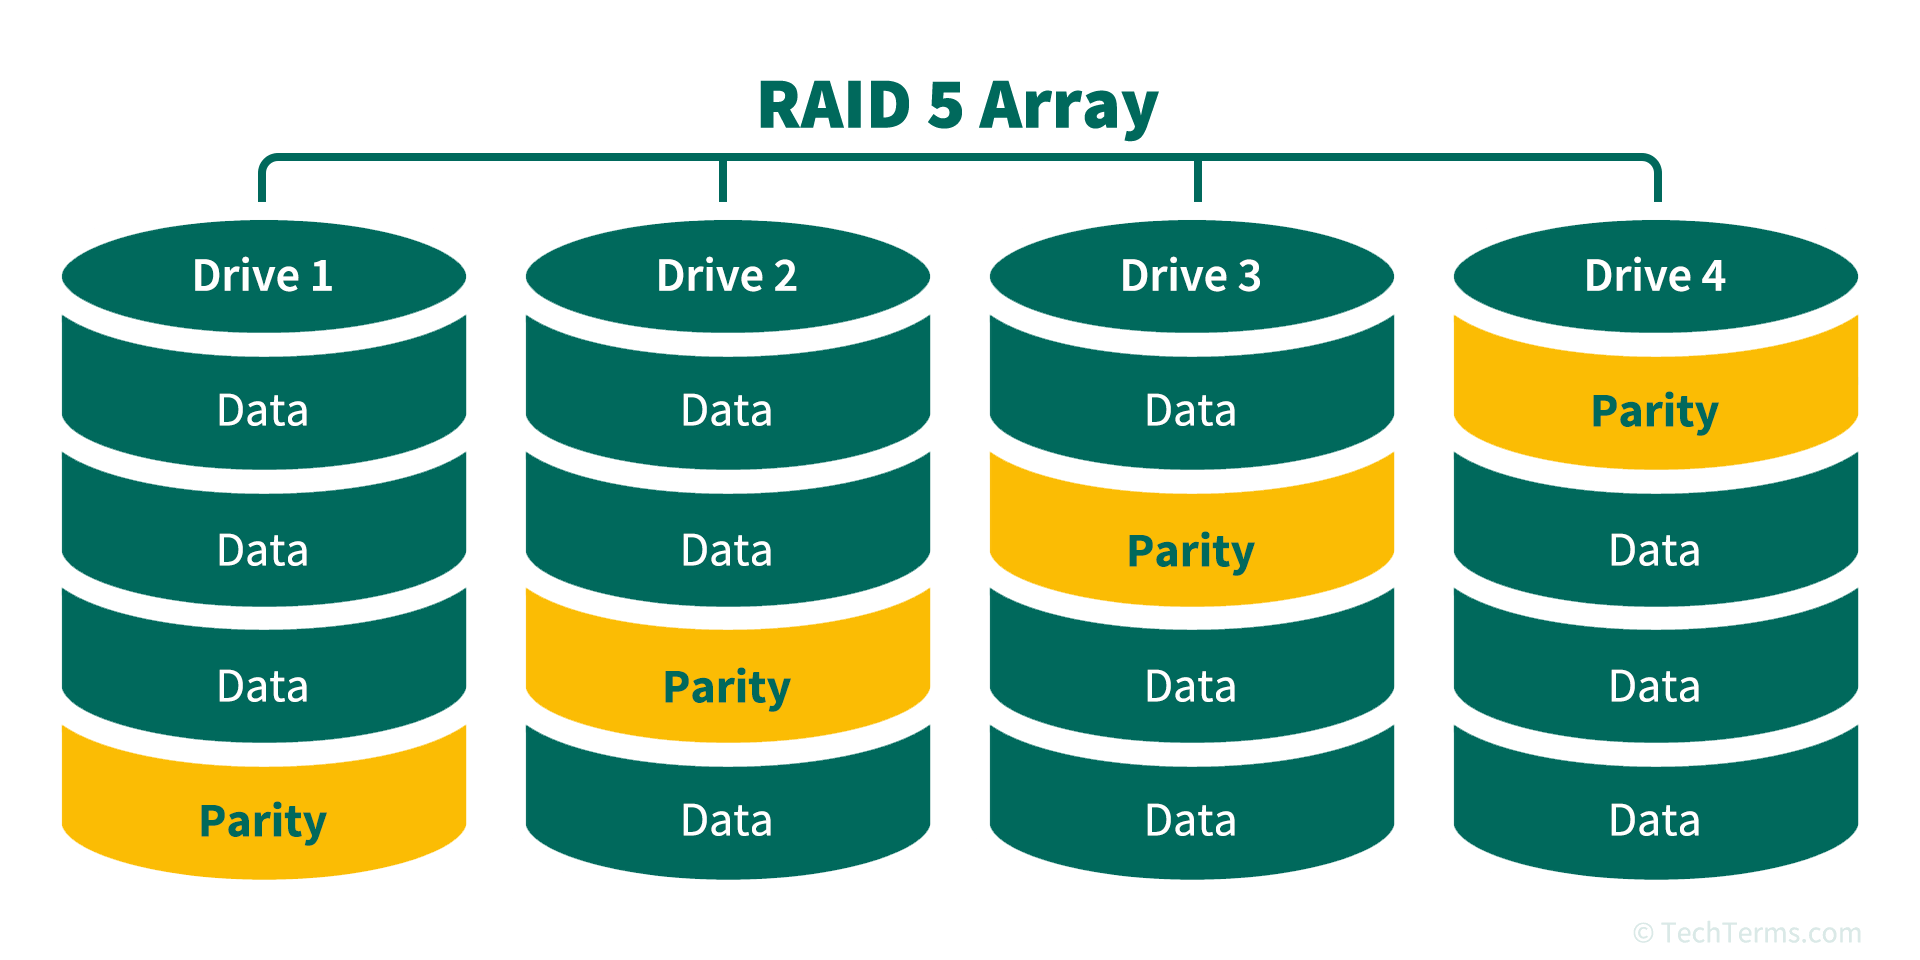 RAID Definition - What is a RAID array?